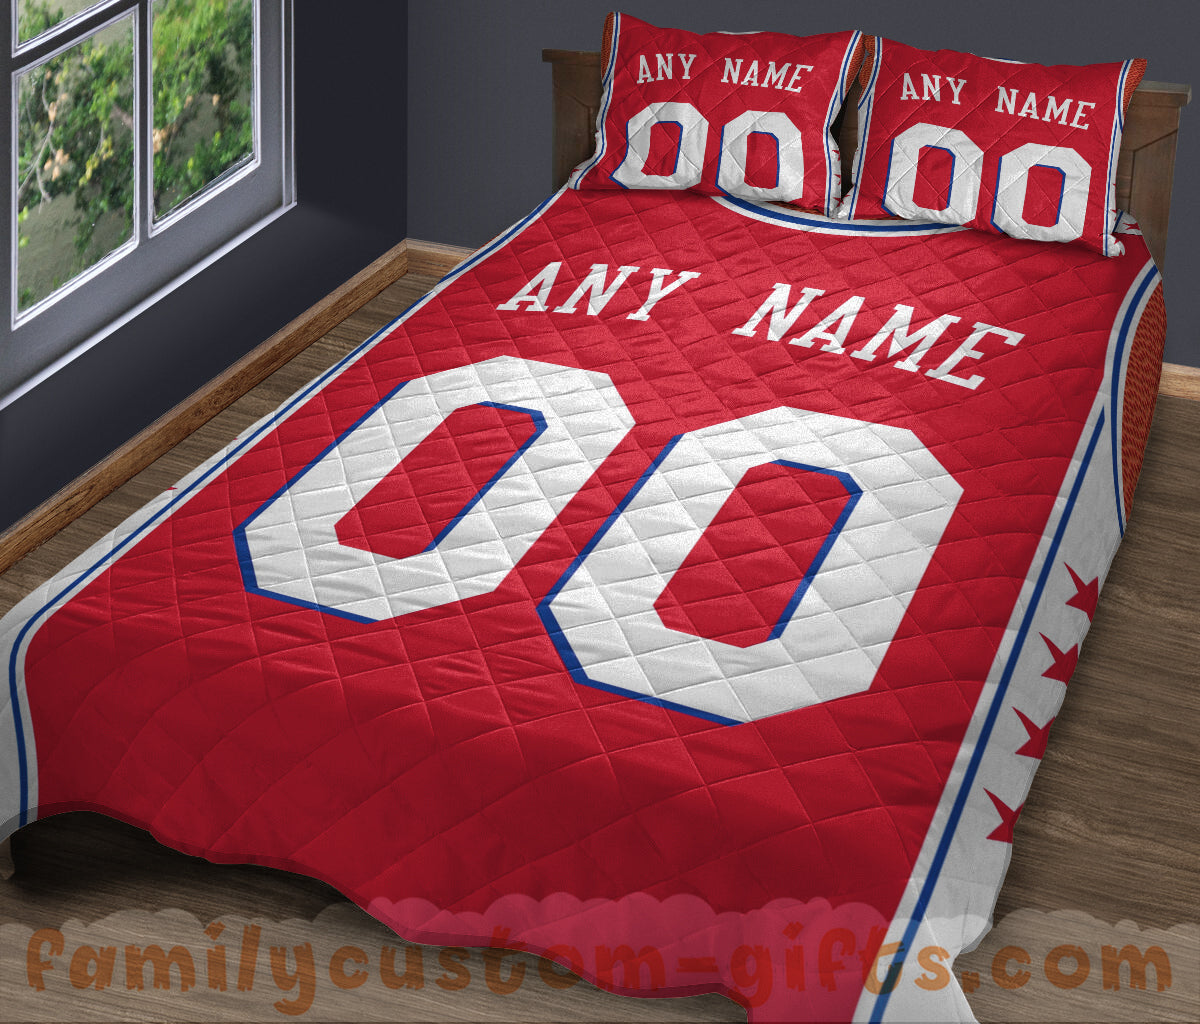 Custom Quilt Sets Philadelphia Jersey Personalized Basketball Premium Quilt Bedding for Men Women